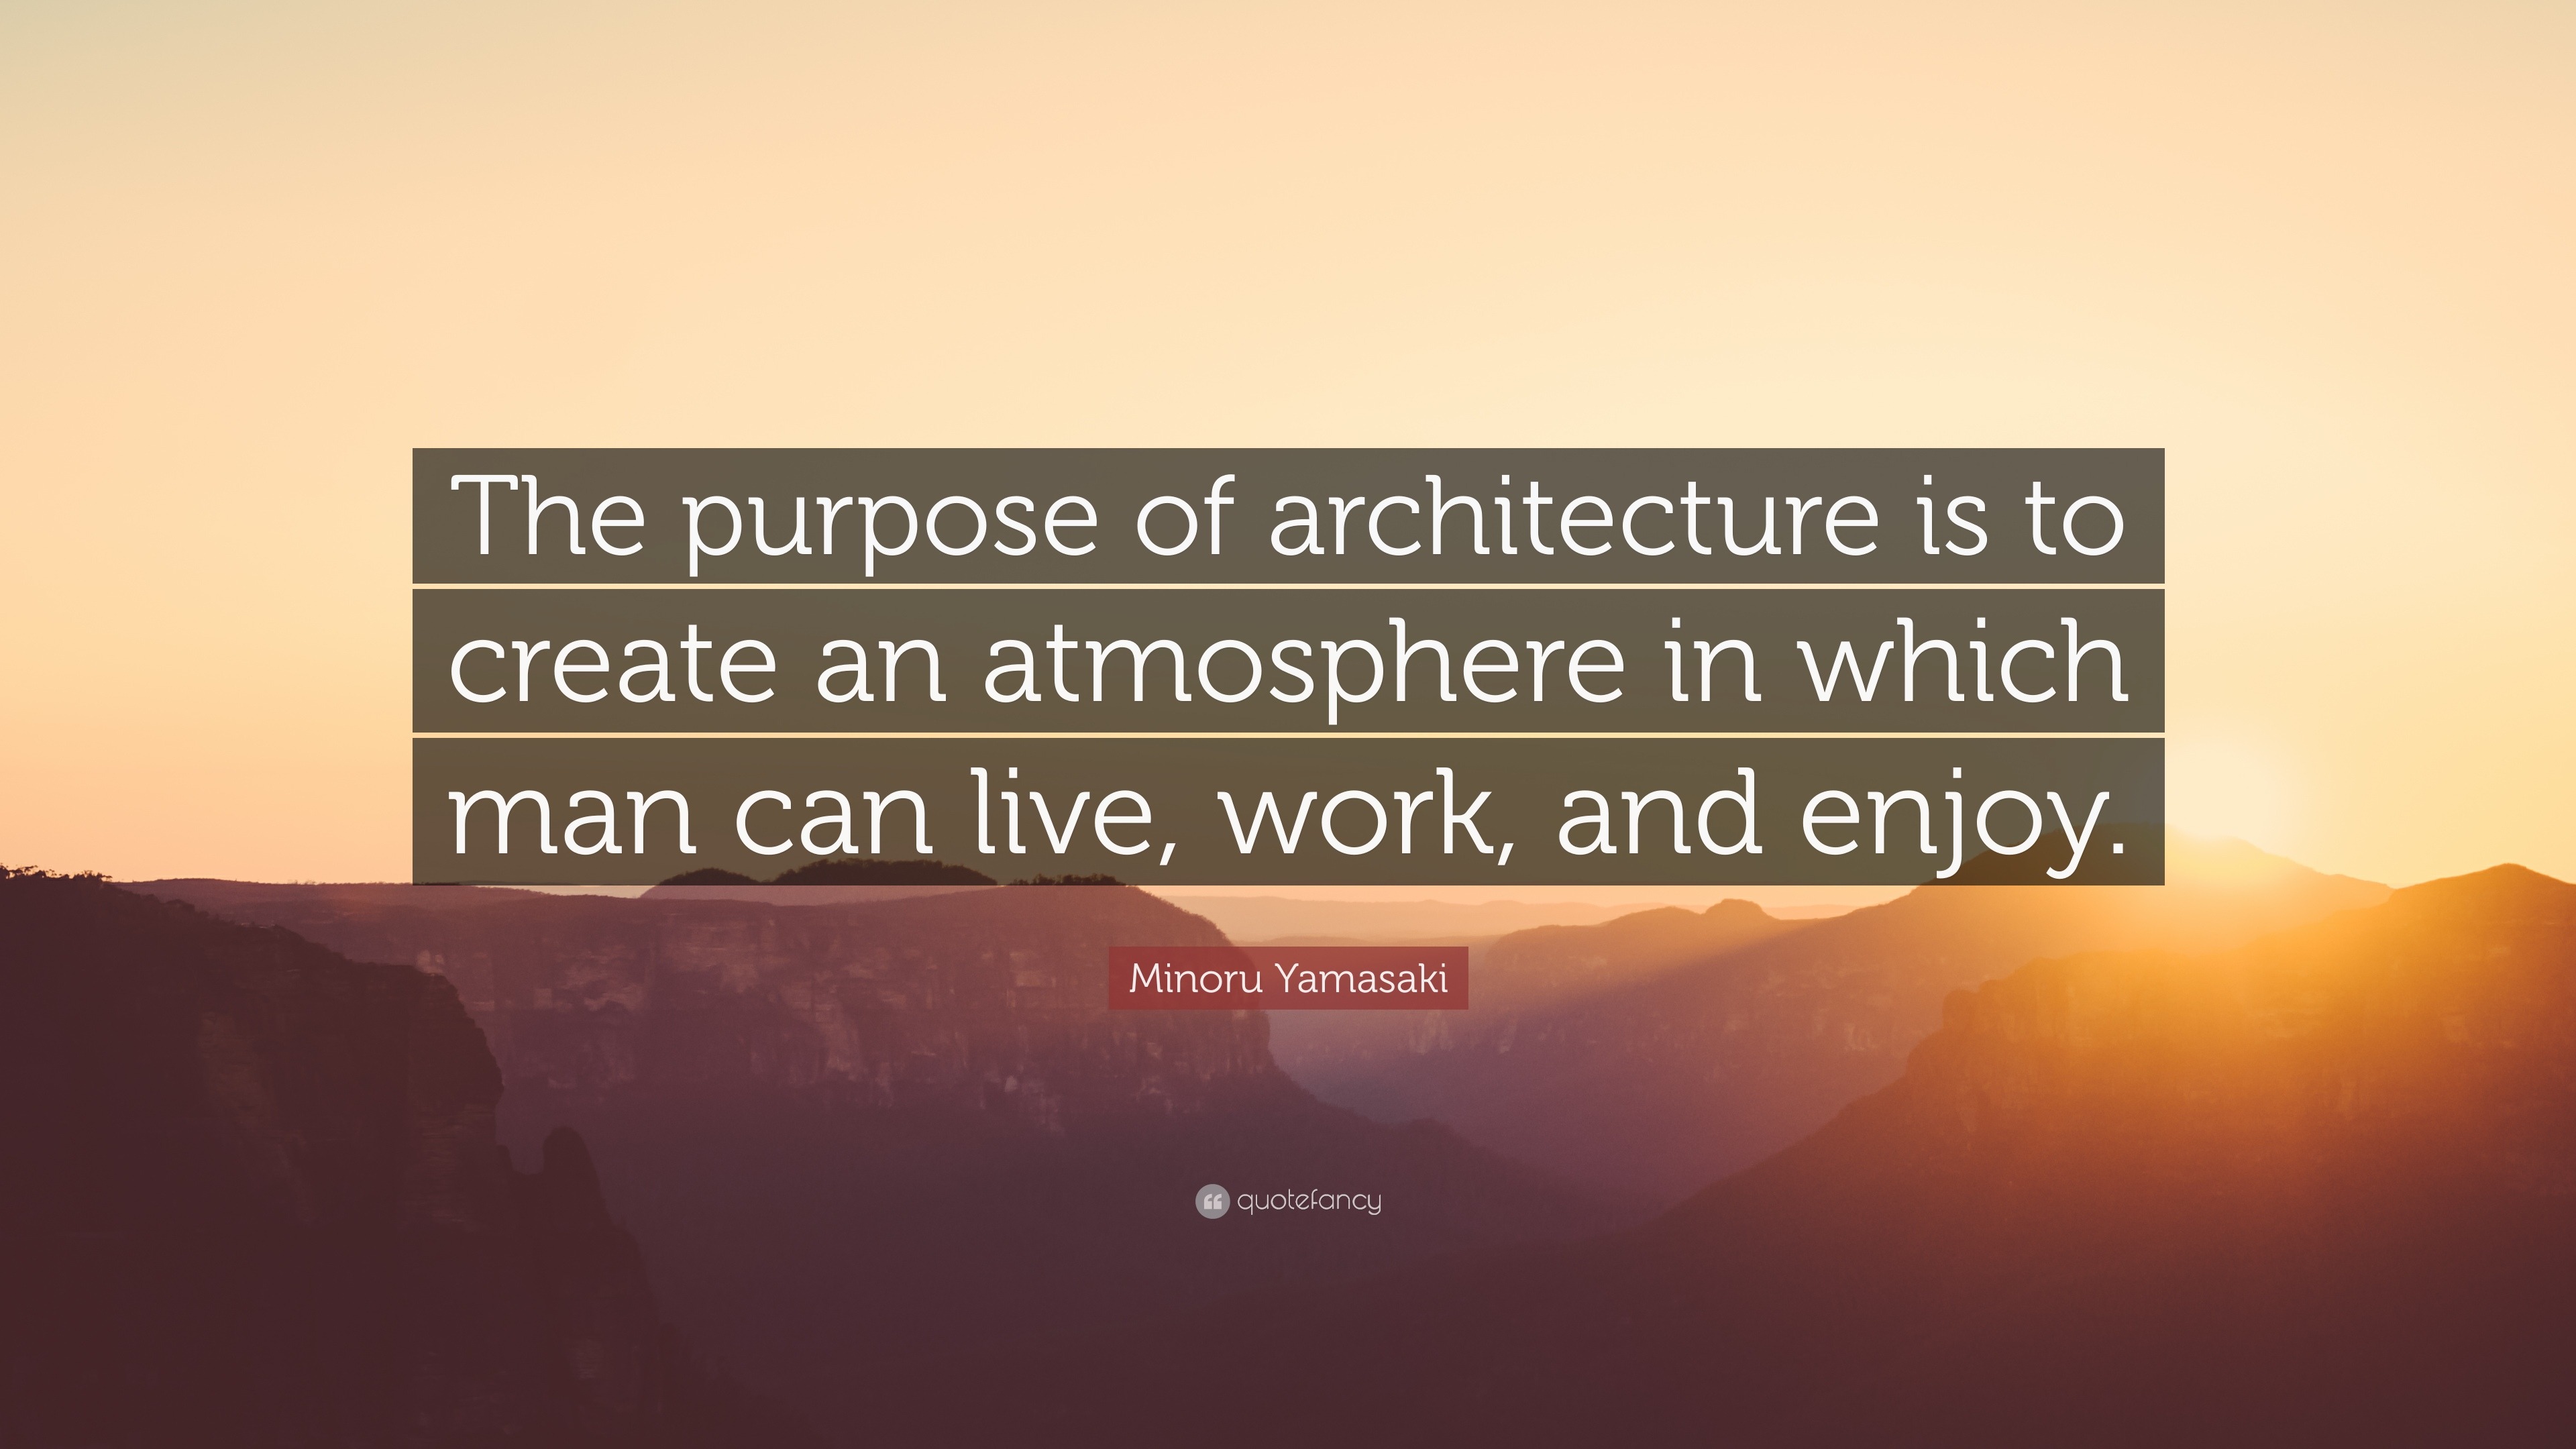 Minoru Yamasaki Quote: “The purpose of architecture is to create an ...